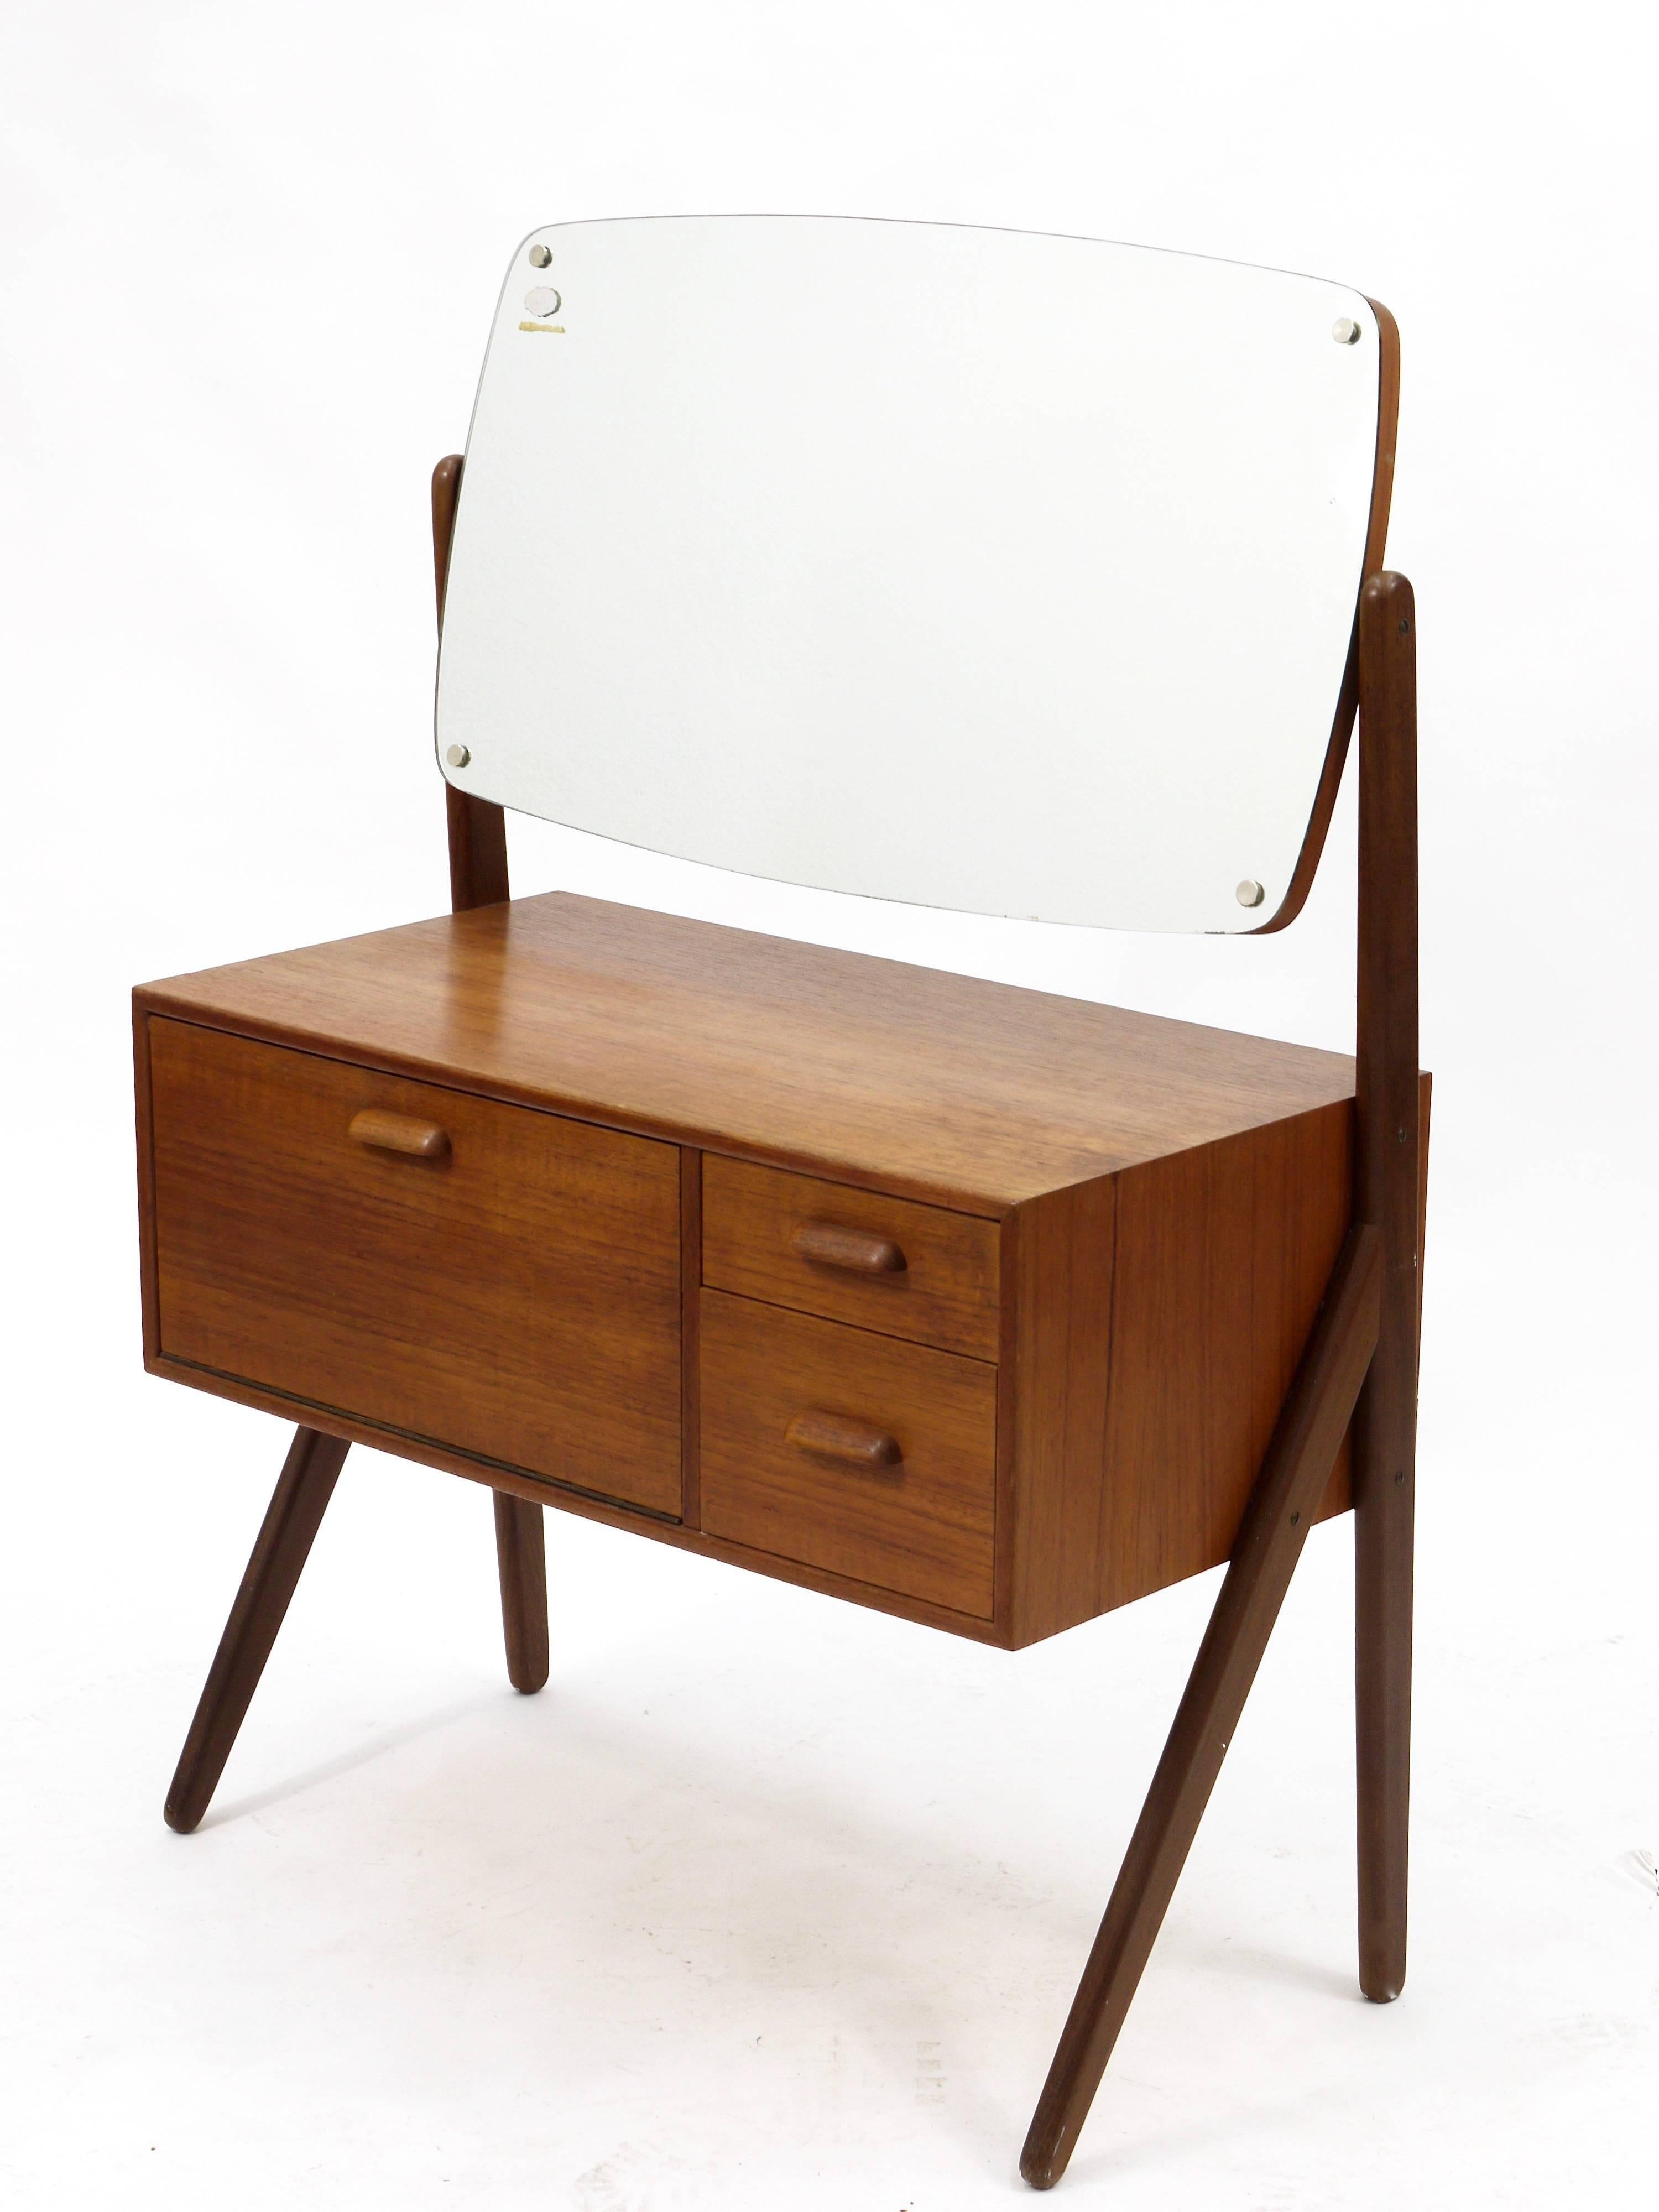 20th Century Danish Modern Teak Vanity Table with Drawers, 1950s